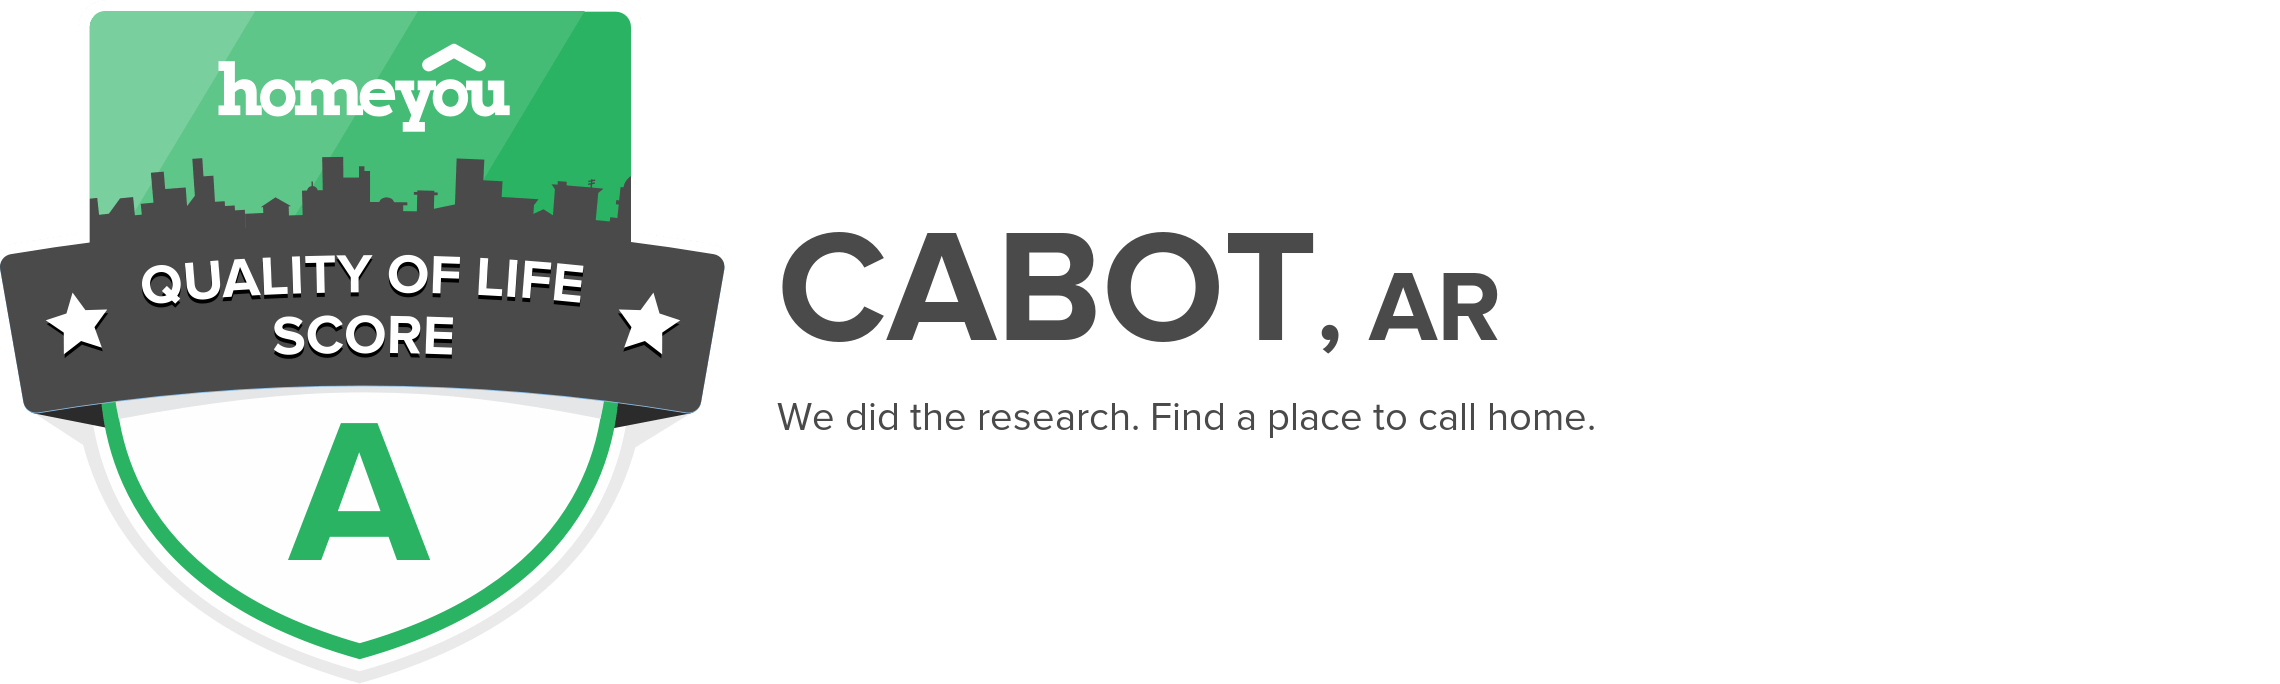 Cabot, AR